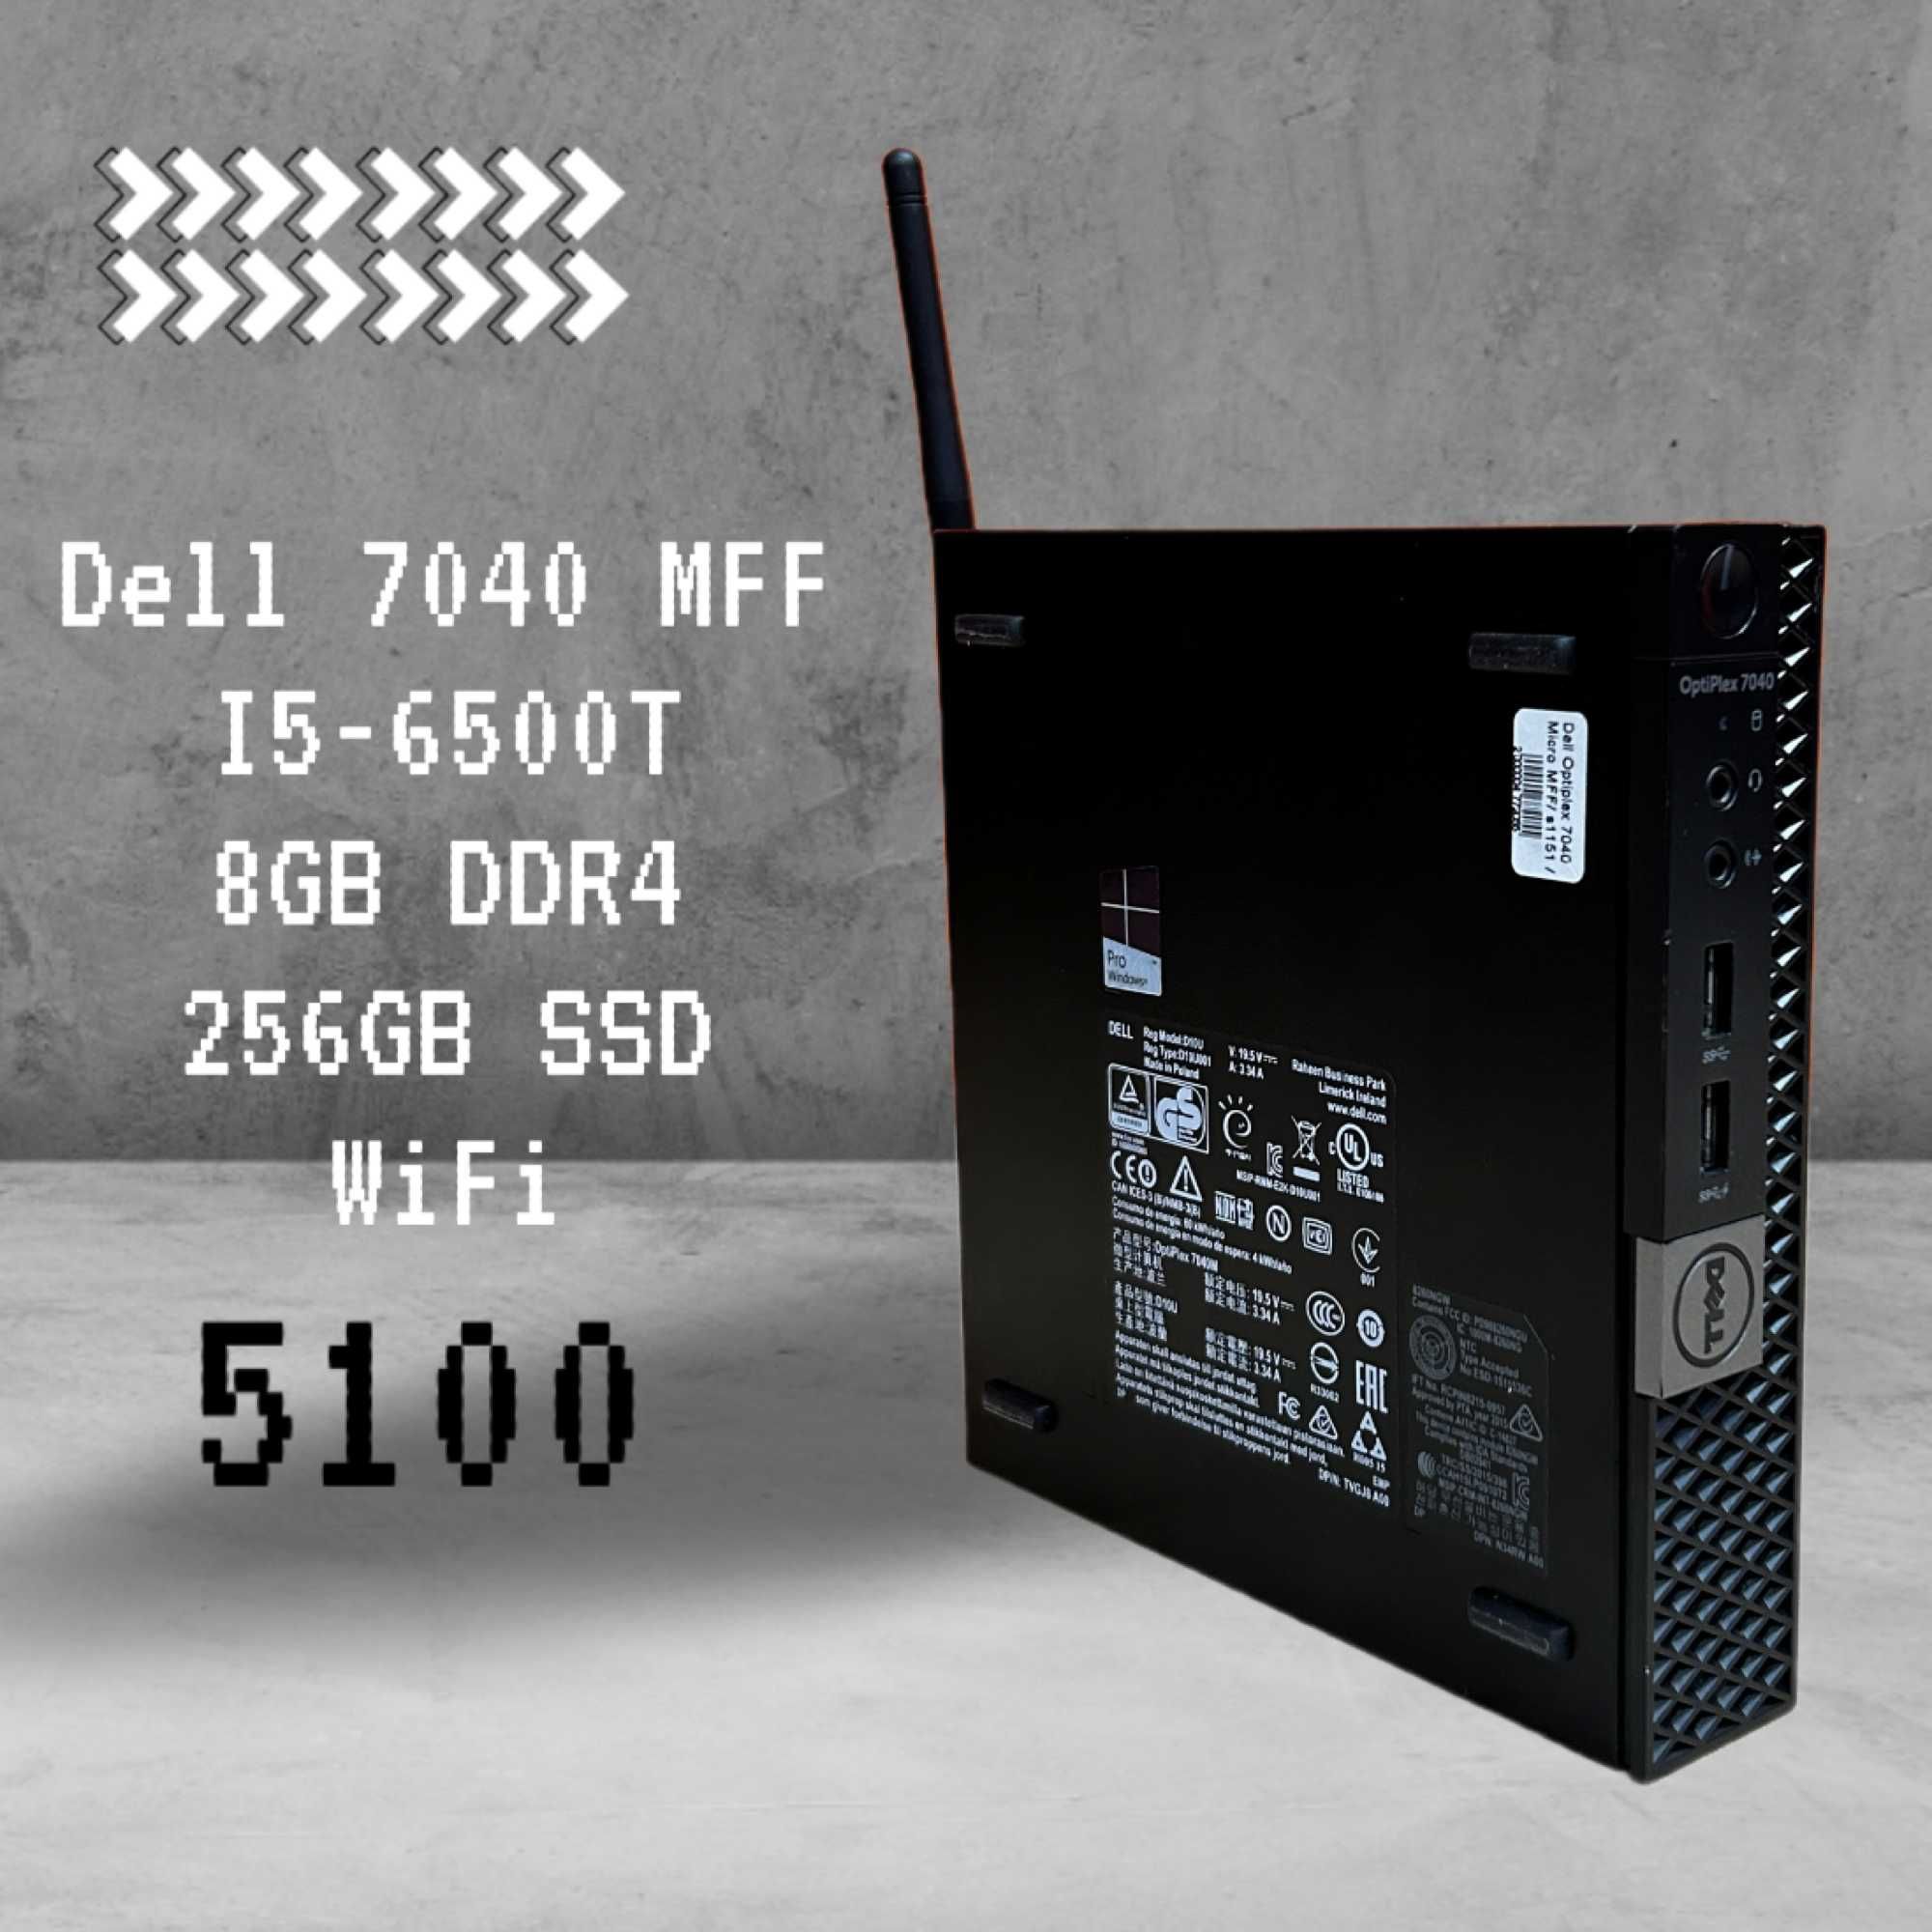 Міні-ПК Dell 7040 MFF | i5-6500T | 8GB DDR4 | 256GB SSD